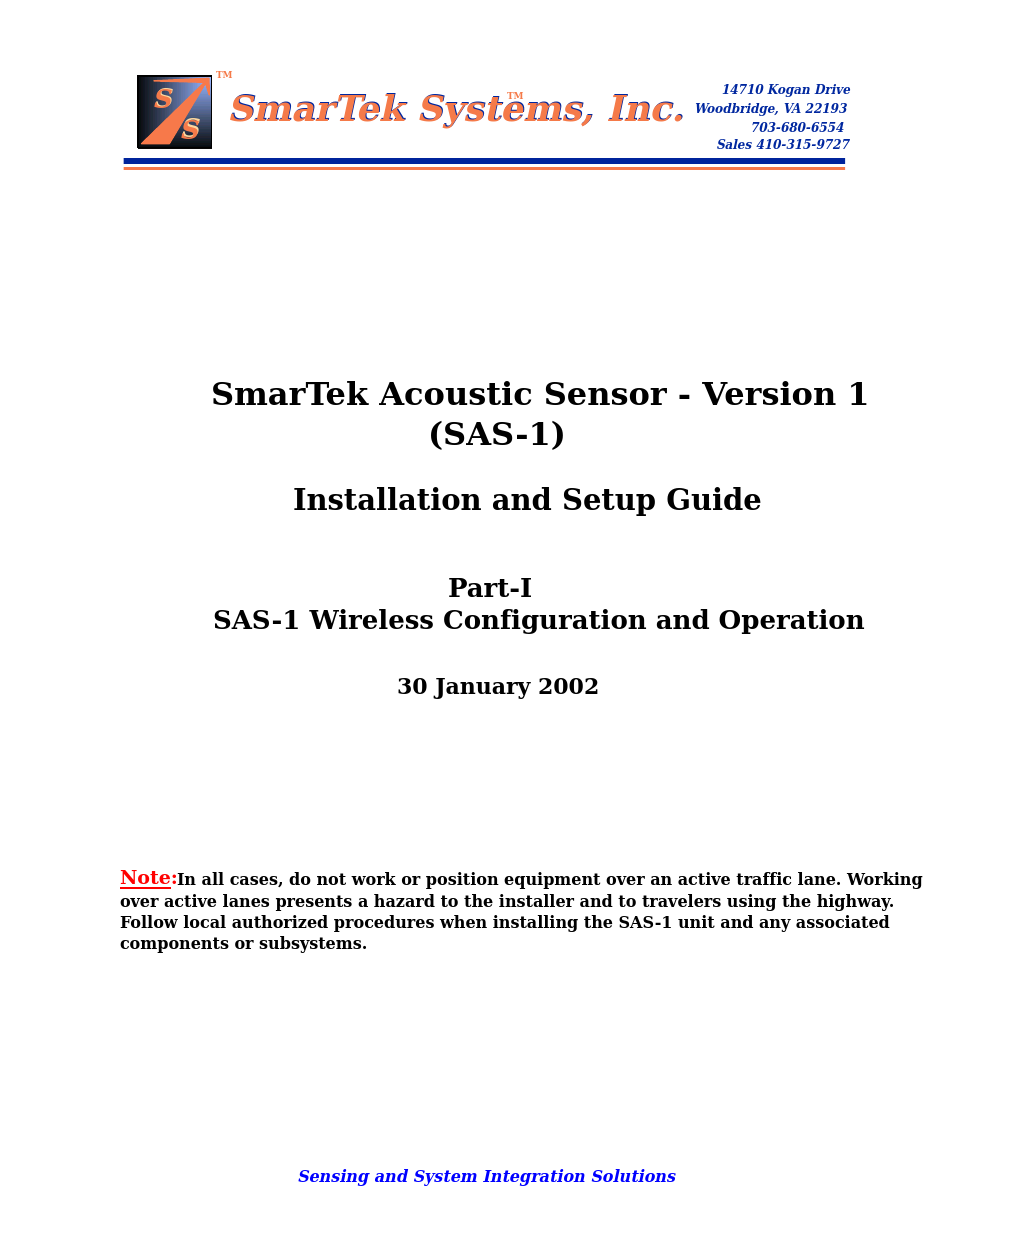 SAS-1 Wireless Configuration and Operation